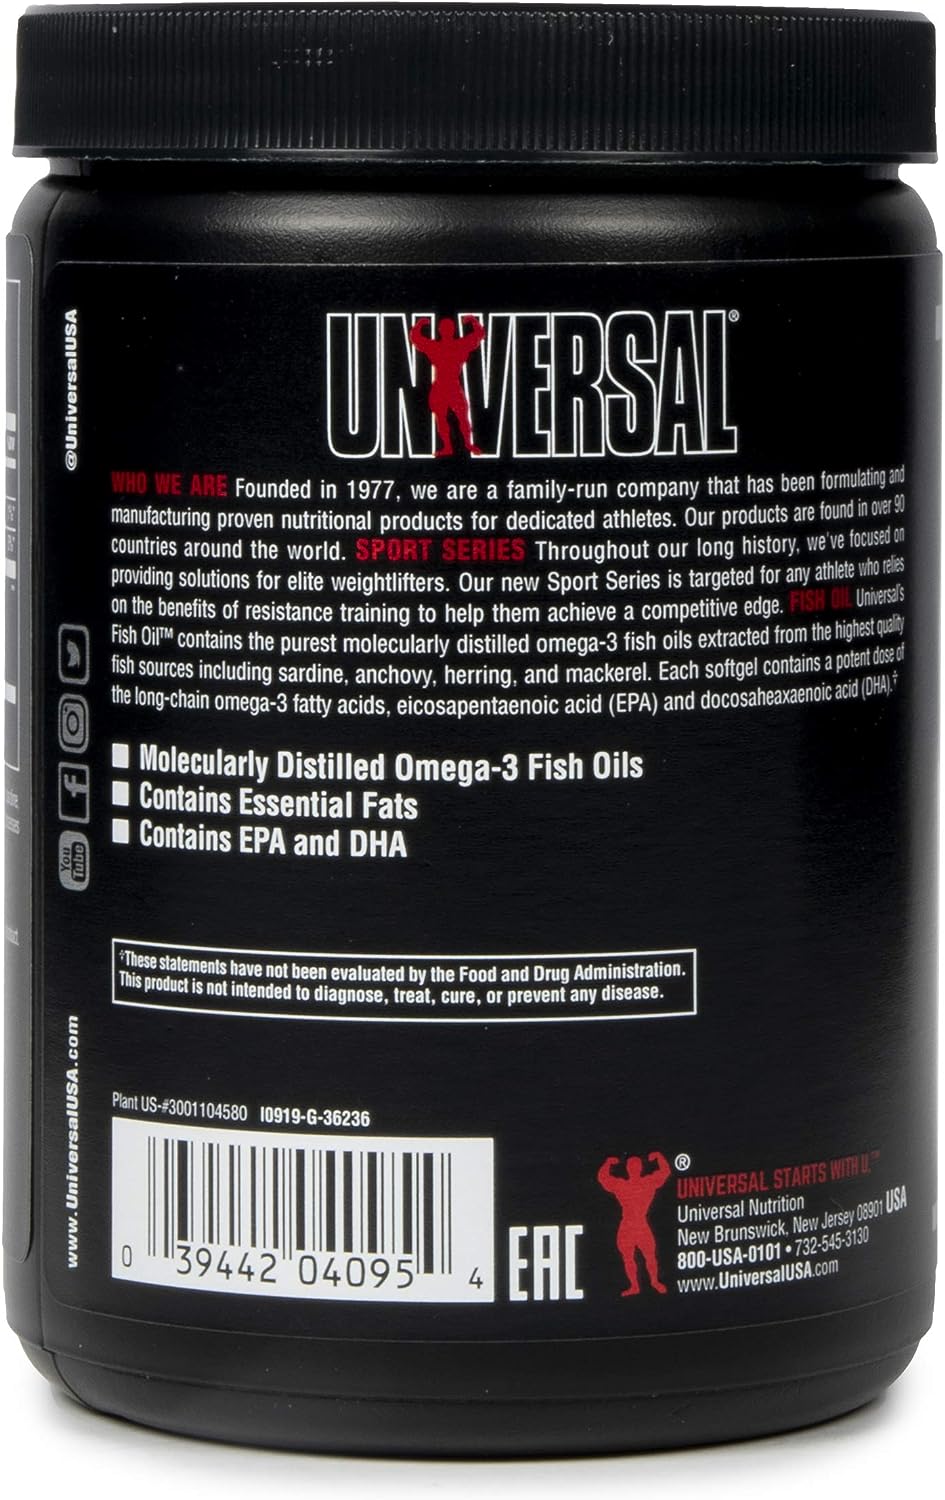 Universal Nutrition Fish Oil, 100 Softgels